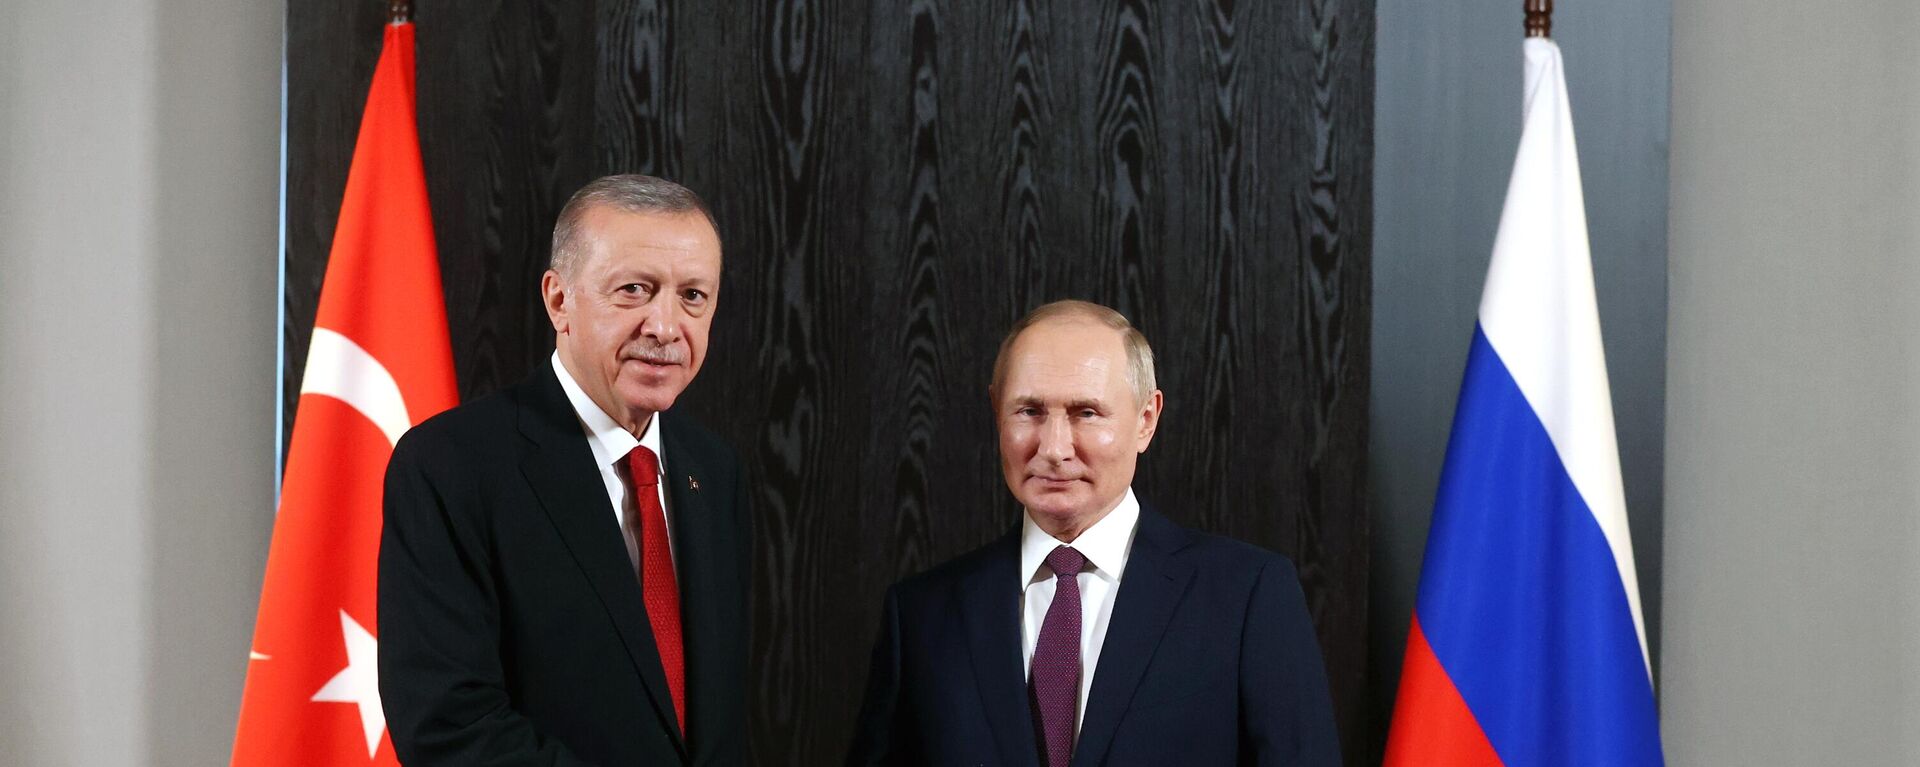 El presidente turco, Recep Tayyip Erdogan, y el presidente ruso, Vladímir Putin - Sputnik Mundo, 1920, 11.12.2022